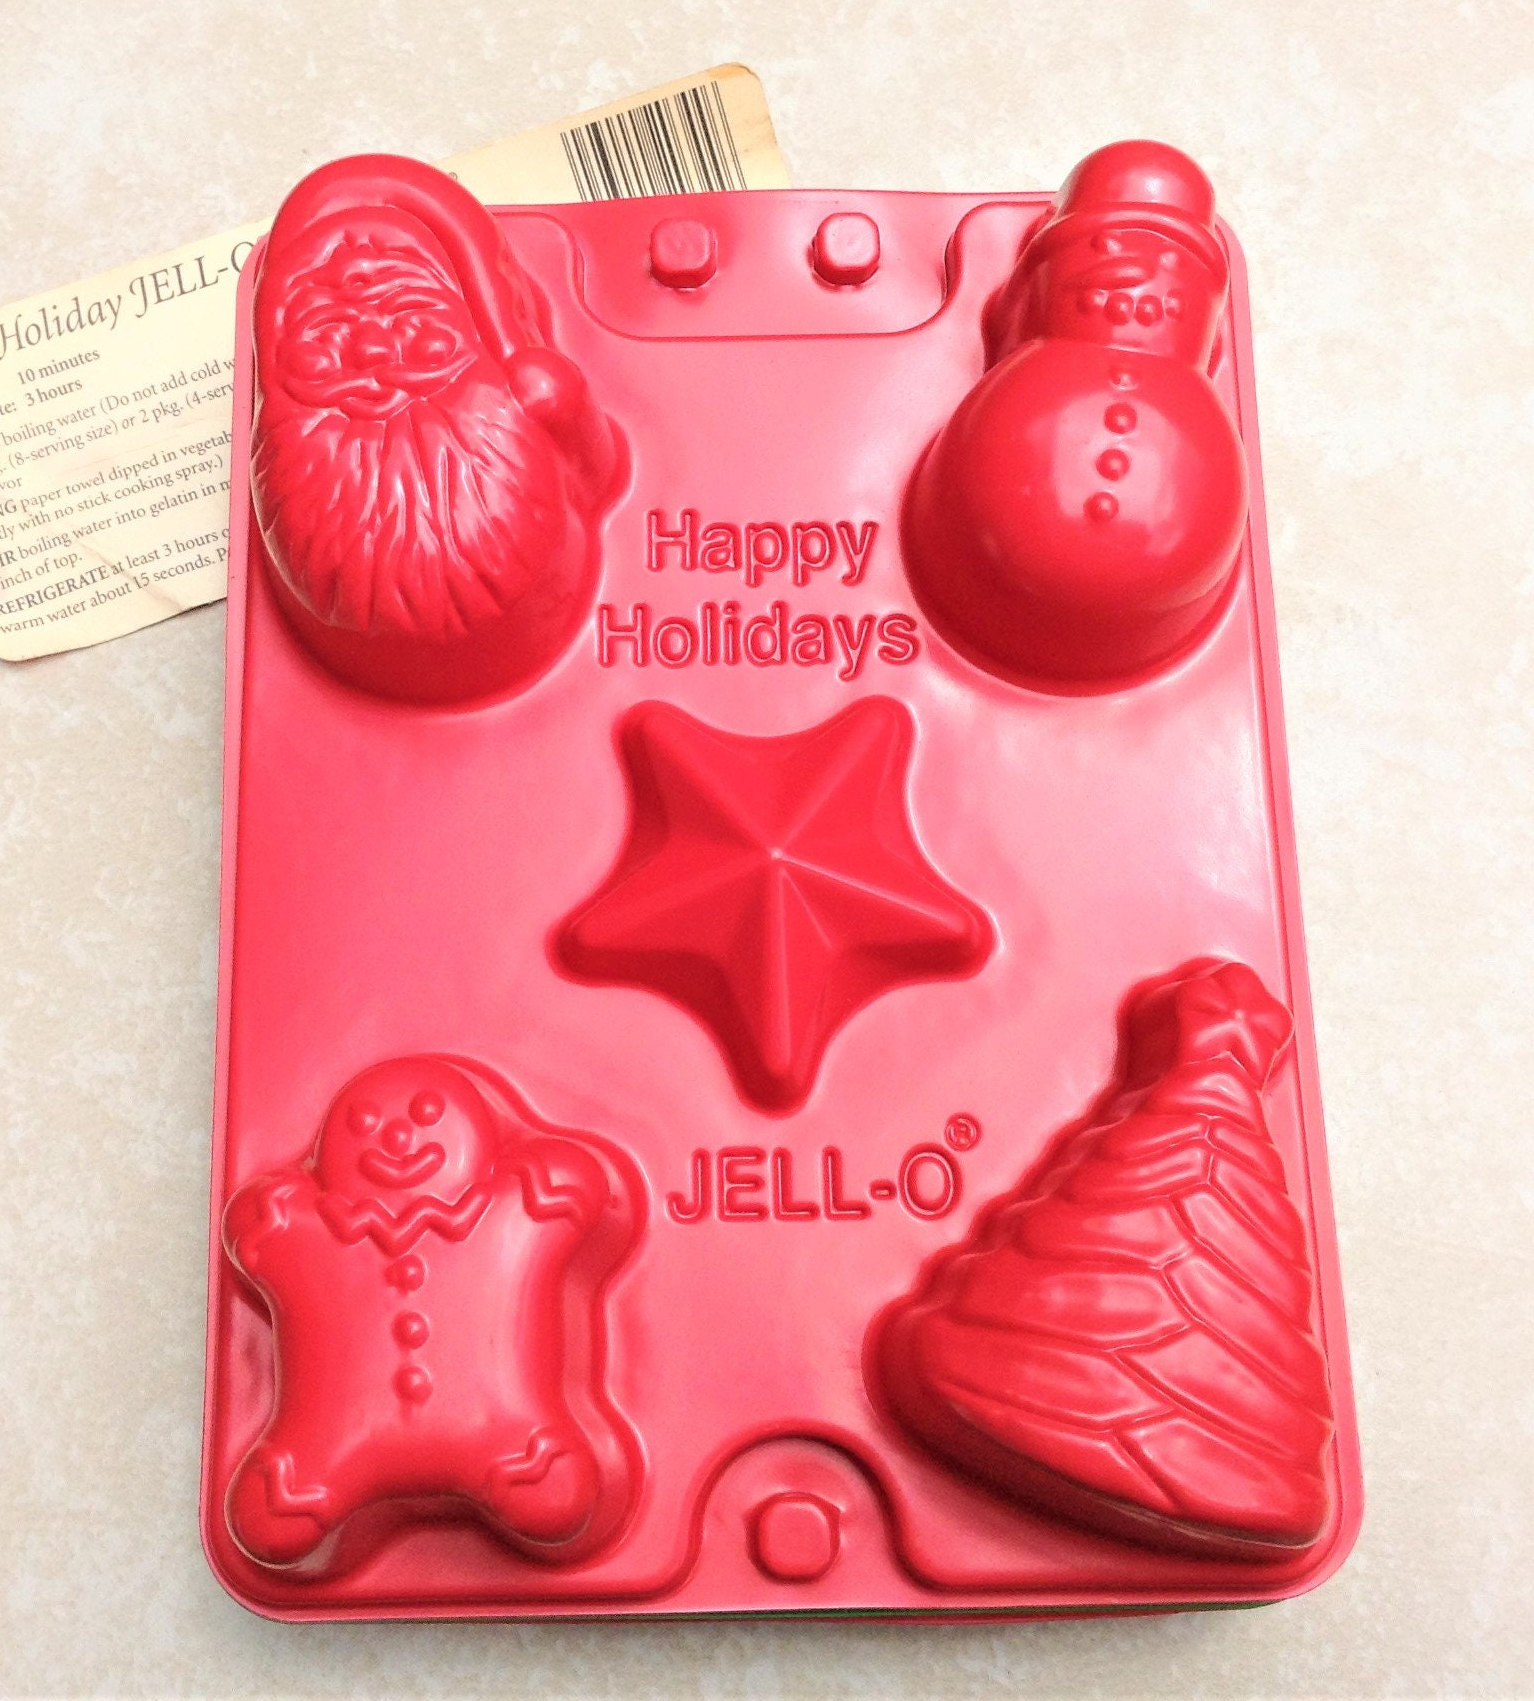 Jell-O Jigglers Berry Blue & Lemon Zoo Mold Kit, Jello & Pudding Mix